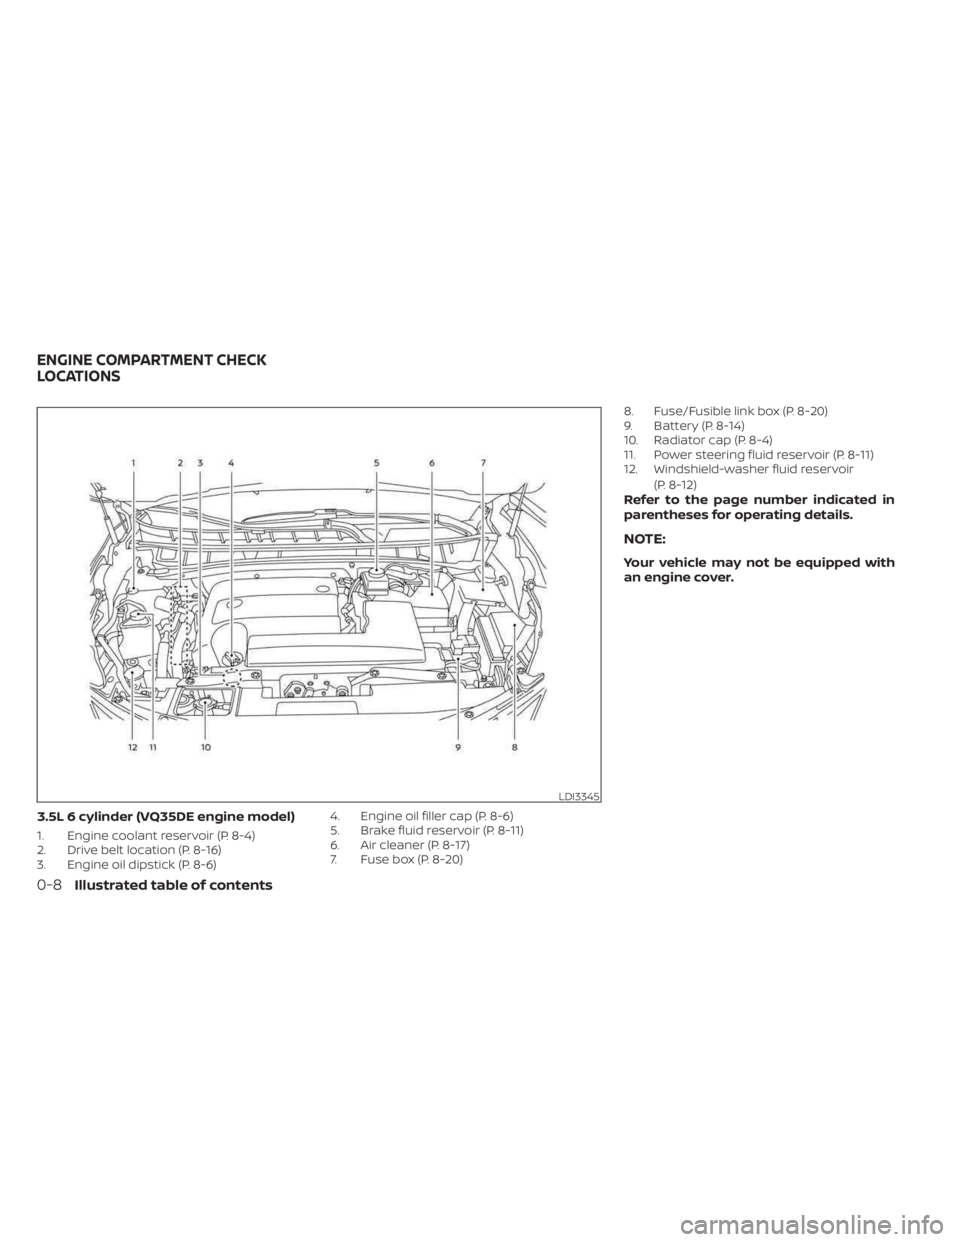 NISSAN MURANO 2023  Owners Manual 3.5L 6 cylinder (VQ35DE engine model)
1. Engine coolant reservoir (P. 8-4)
2. Drive belt location (P. 8-16)
3. Engine oil dipstick (P. 8-6)4. Engine oil filler cap (P. 8-6)
5. Brake fluid reservoir (P